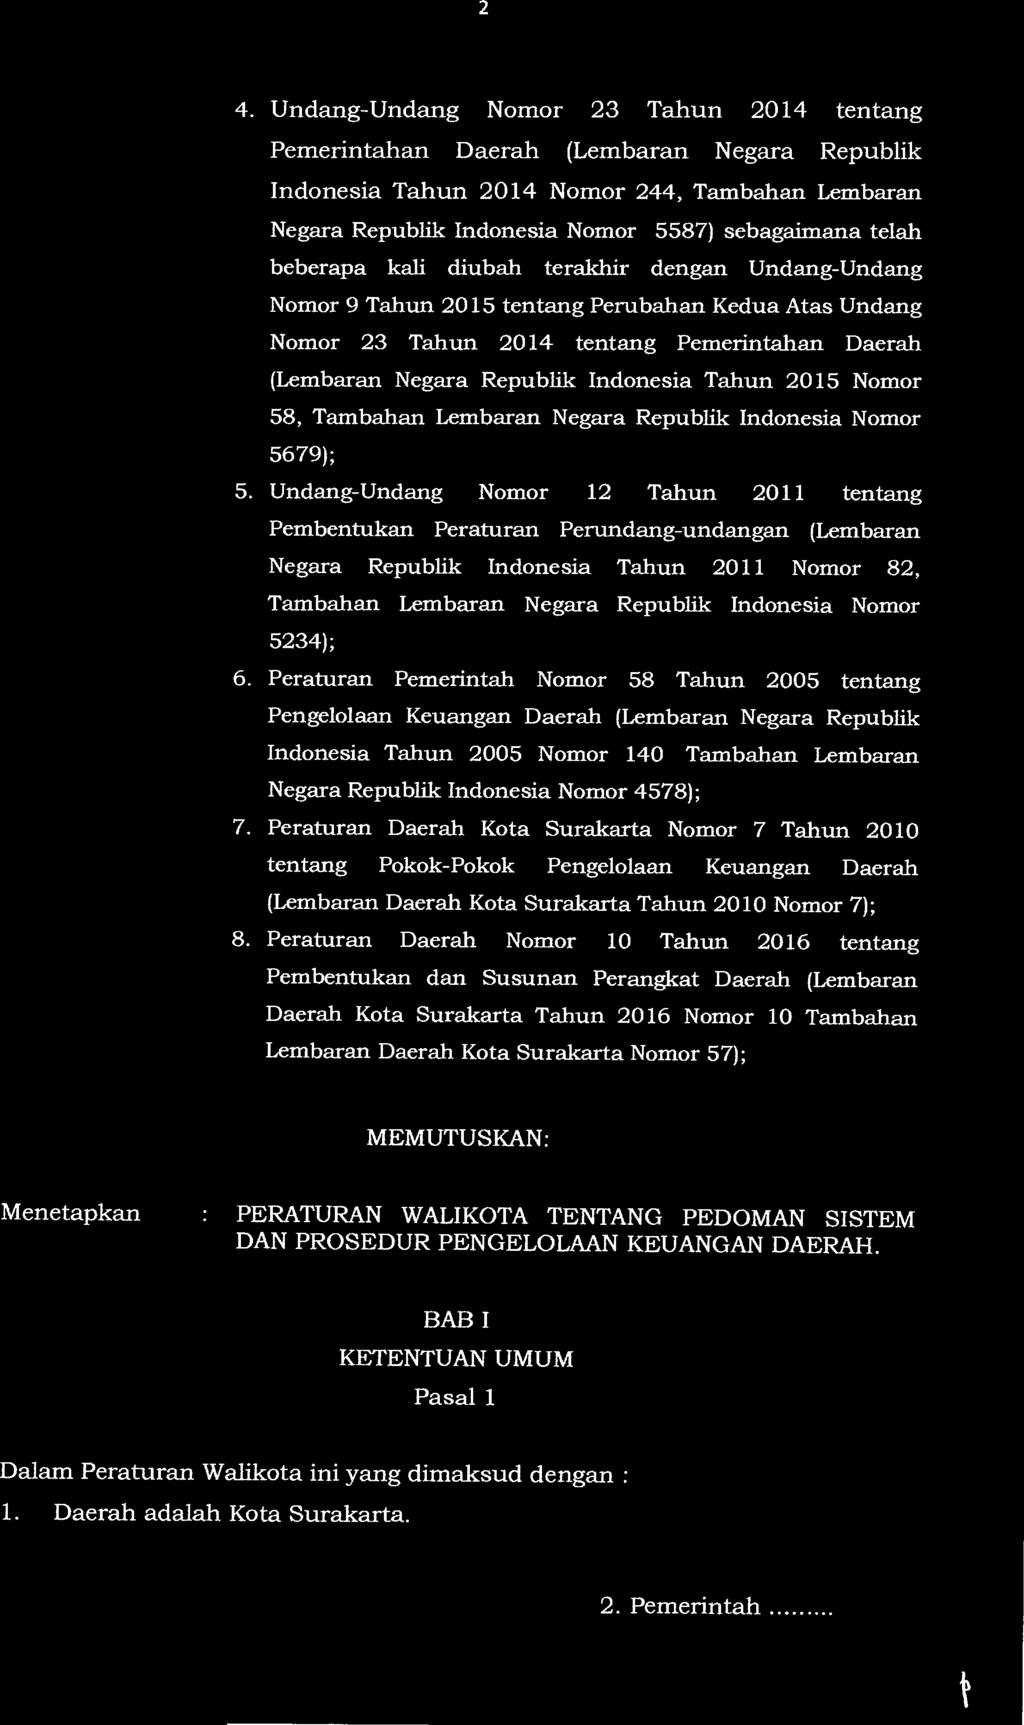 2 4. Undang-Undang Nomor 23 Tahun 2014 tentang Pemerintahan Daerah (Lembaran Negara Republik Indonesia Tahun 2014 Nomor 244, Tambahan Lembaran Negara Republik Indonesia Nomor 5587) sebagaimana telah